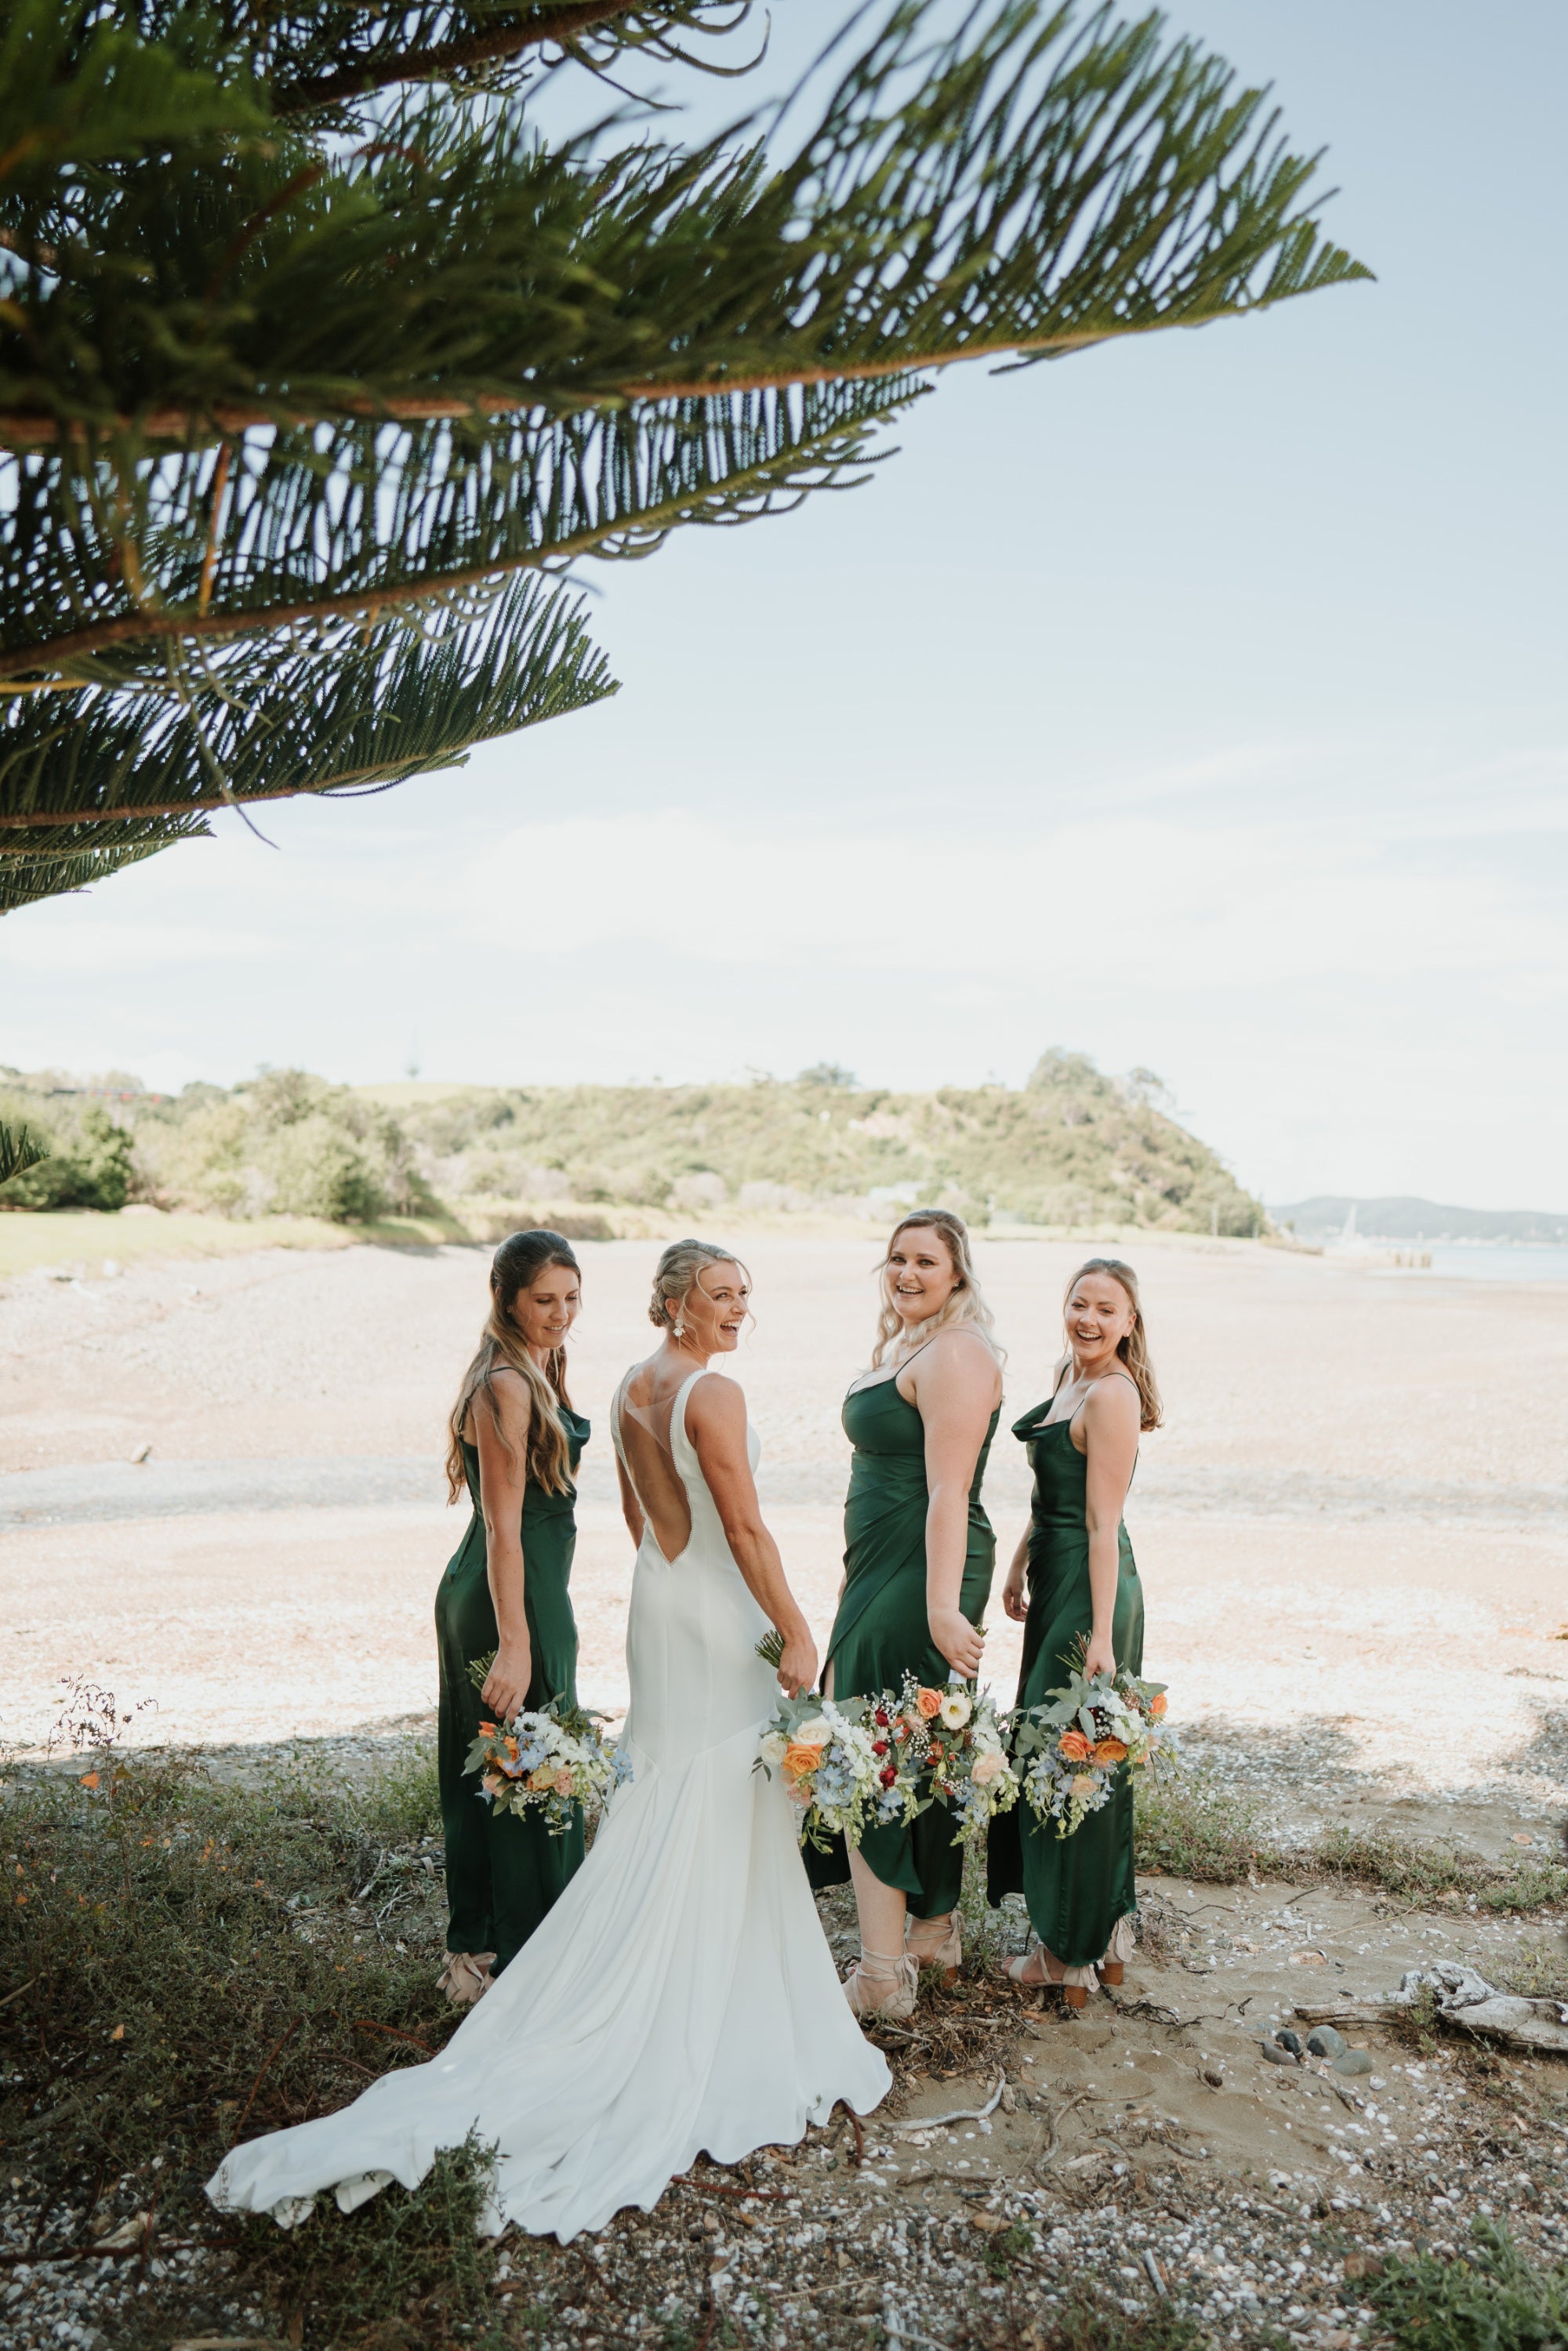 Mandy and bridesmaid green dresses | Tawharanui Beach | The Paper Gazelle